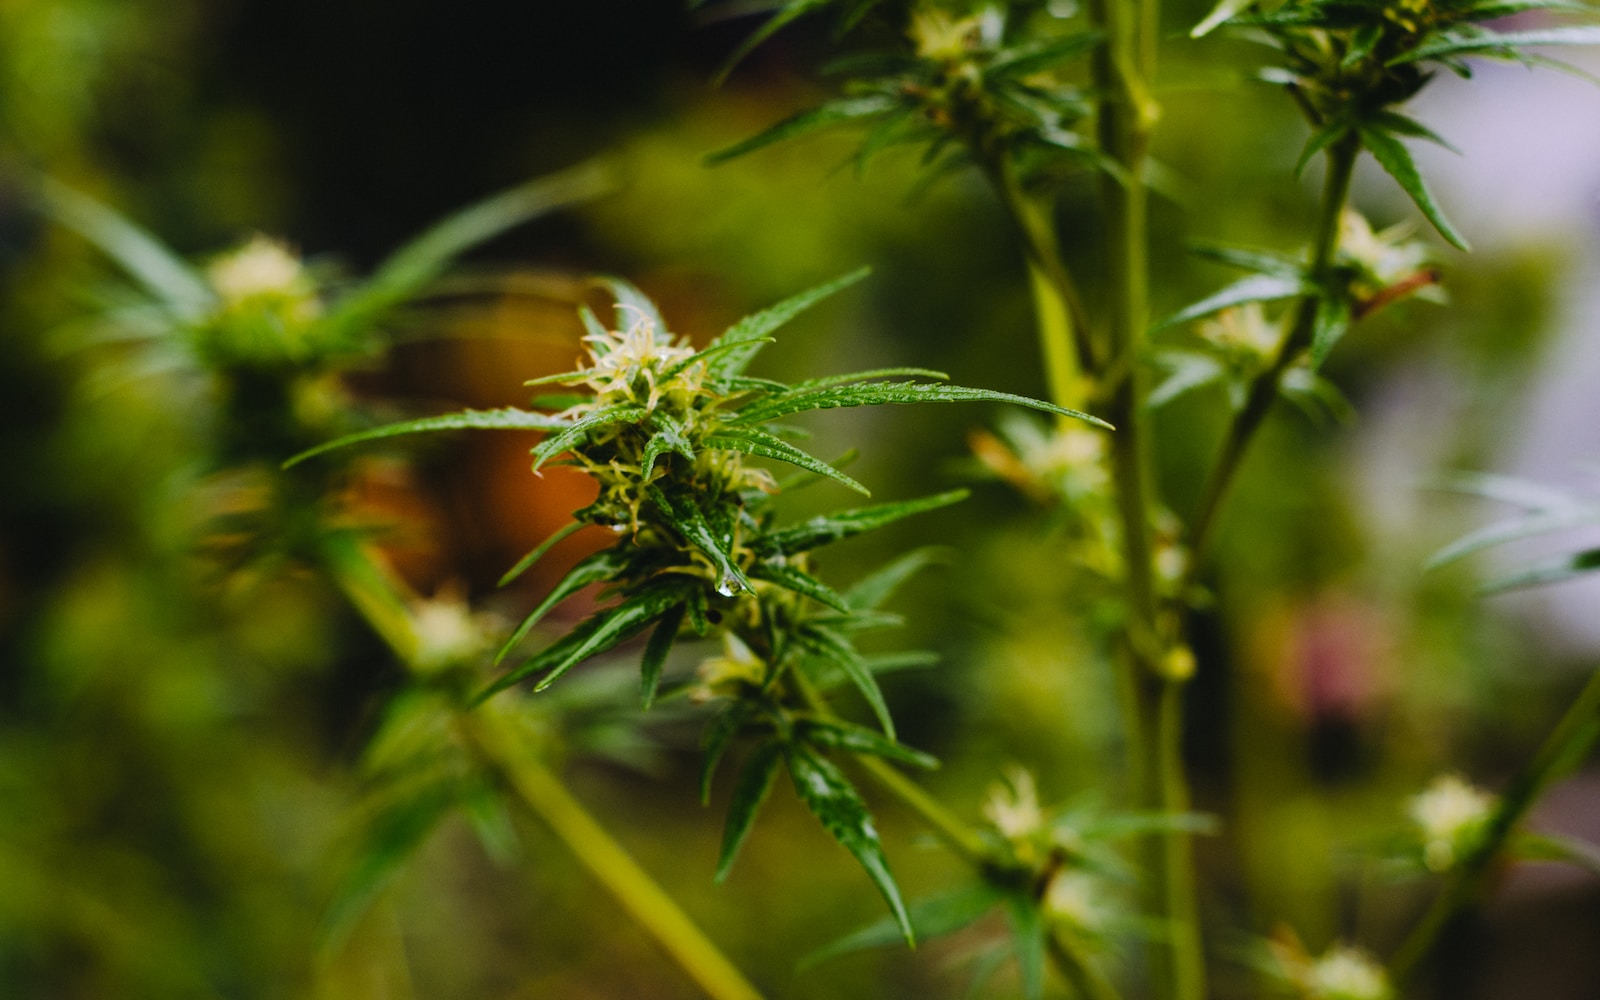 close up real image of a cannabis weed